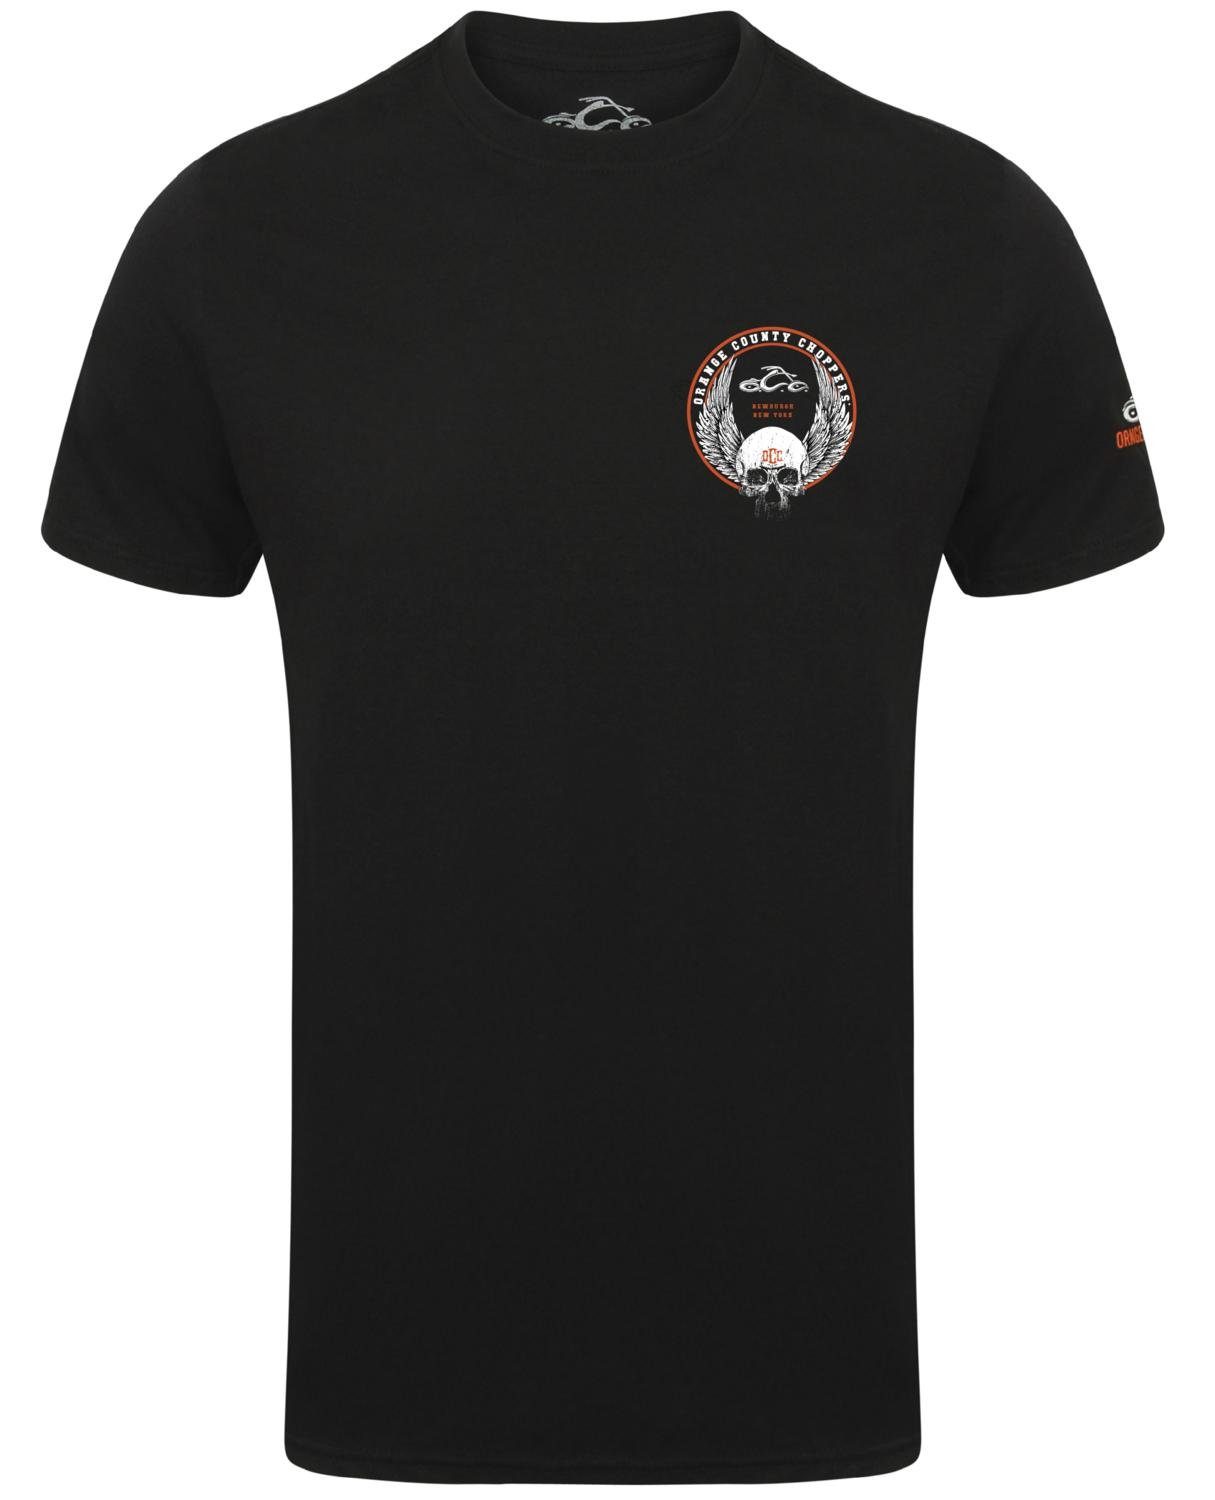 Choppers Orange County T-Shirt